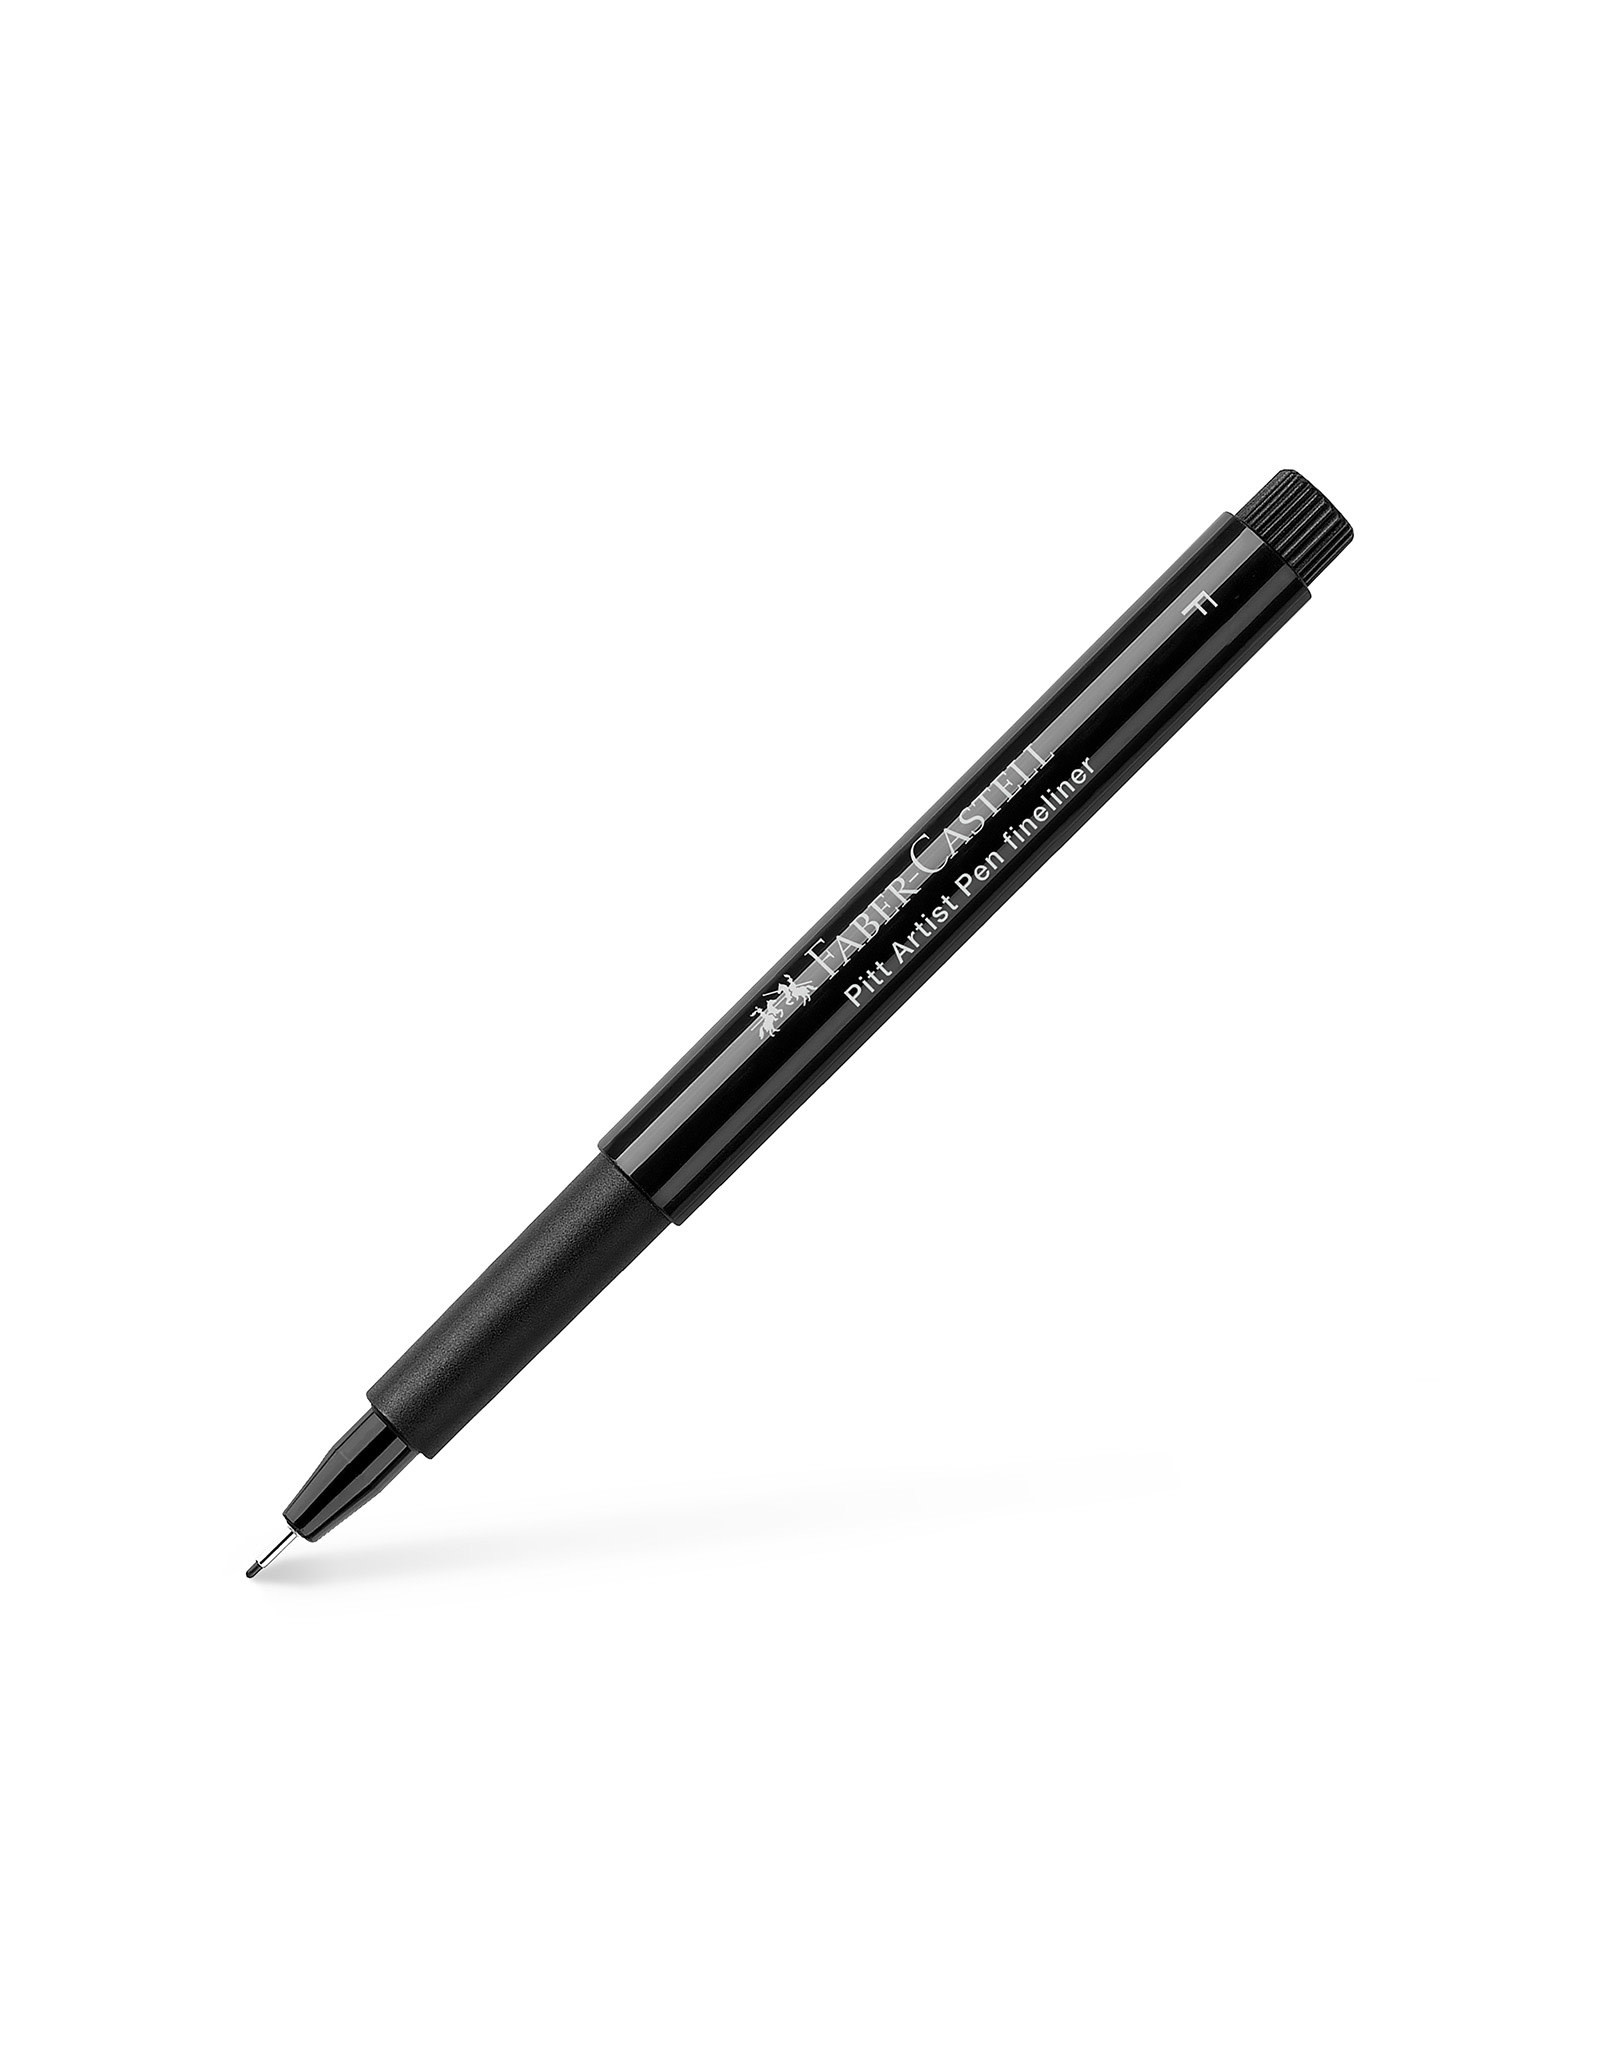 FABER-CASTELL Pitt Artist Pen, Fine, Black